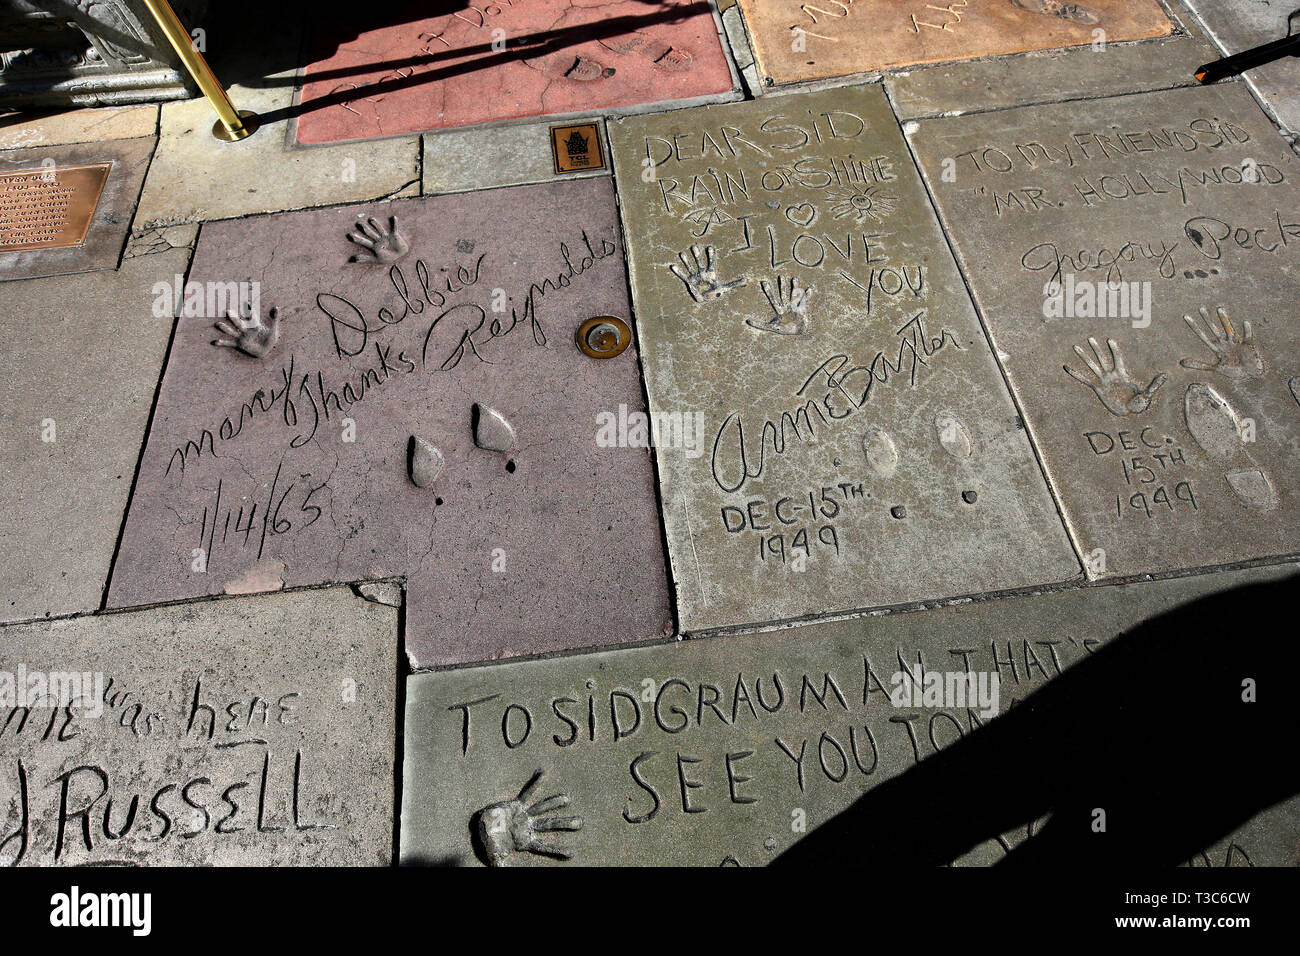 LOS ANGELES, CALIFORNIA - 12 Aprile 2015 : esterni di Grauman's Chinese Theater, a Hollywood e Los Angeles, california, Stati Uniti Foto Stock